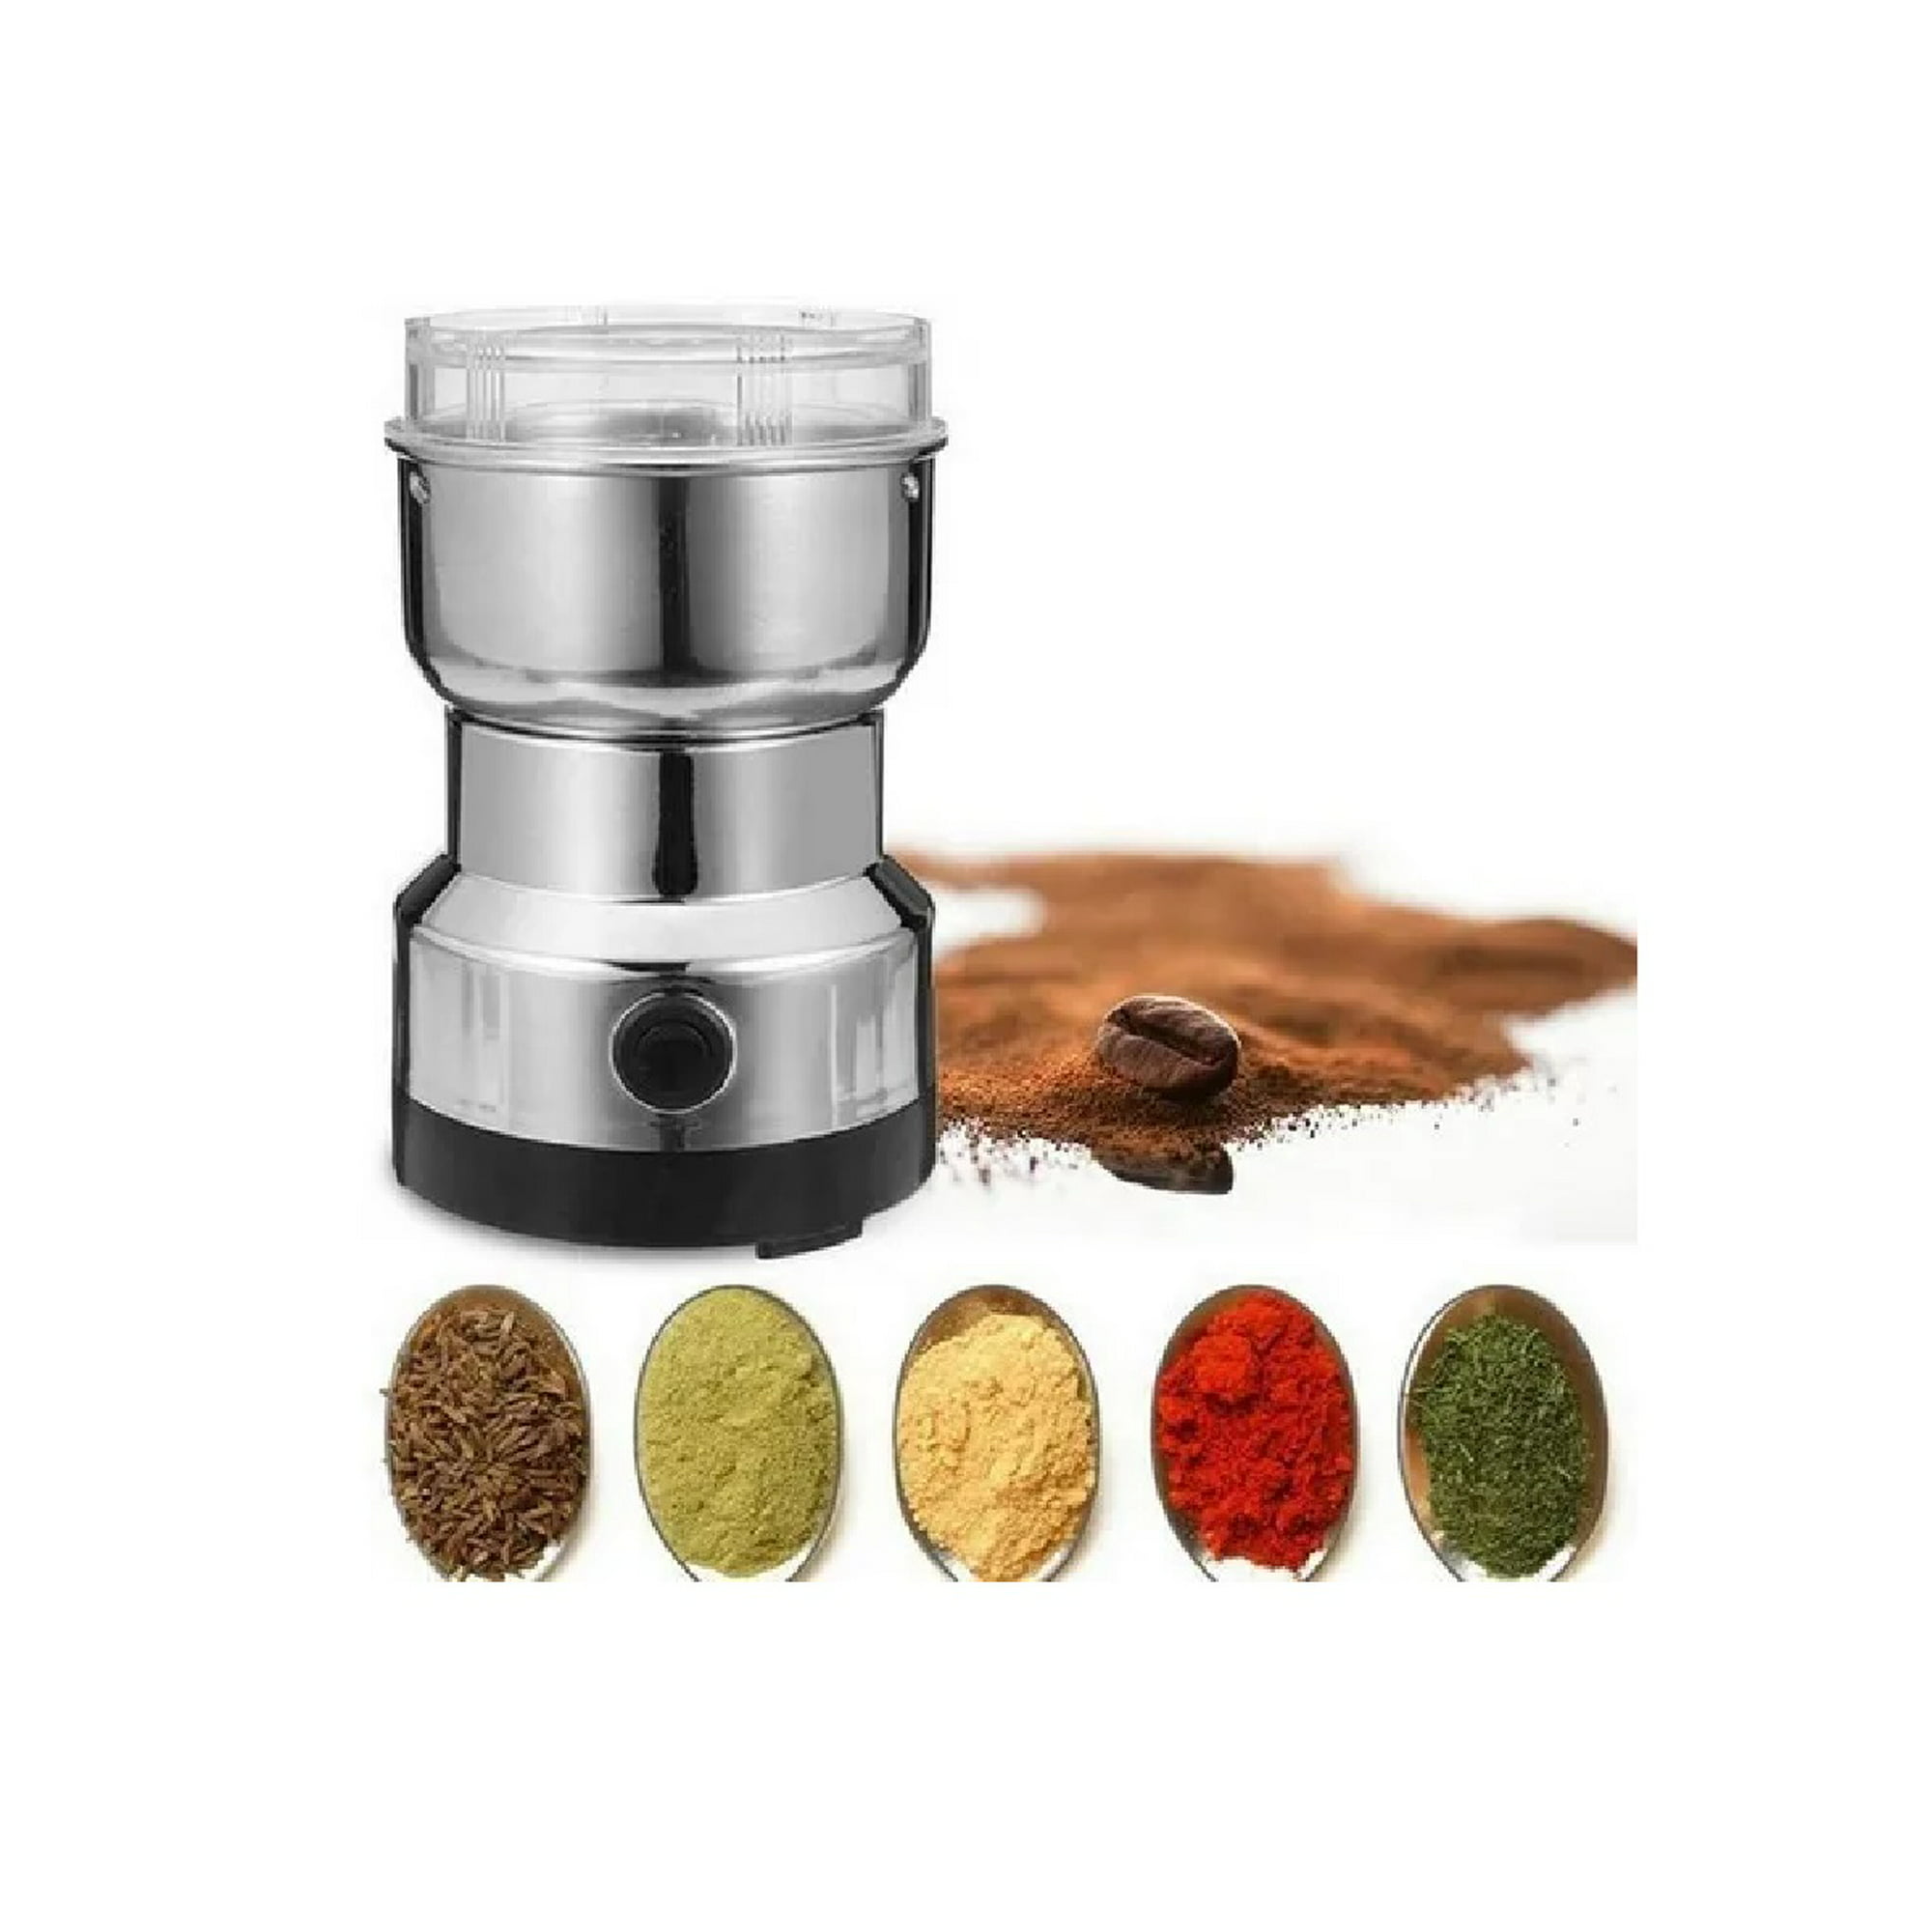 Kaffe - Molinillo eléctrico de granos de café con cepillo de limpieza.  Fácil operación de encendido/apagado para expreso, infusión fría, hierbas